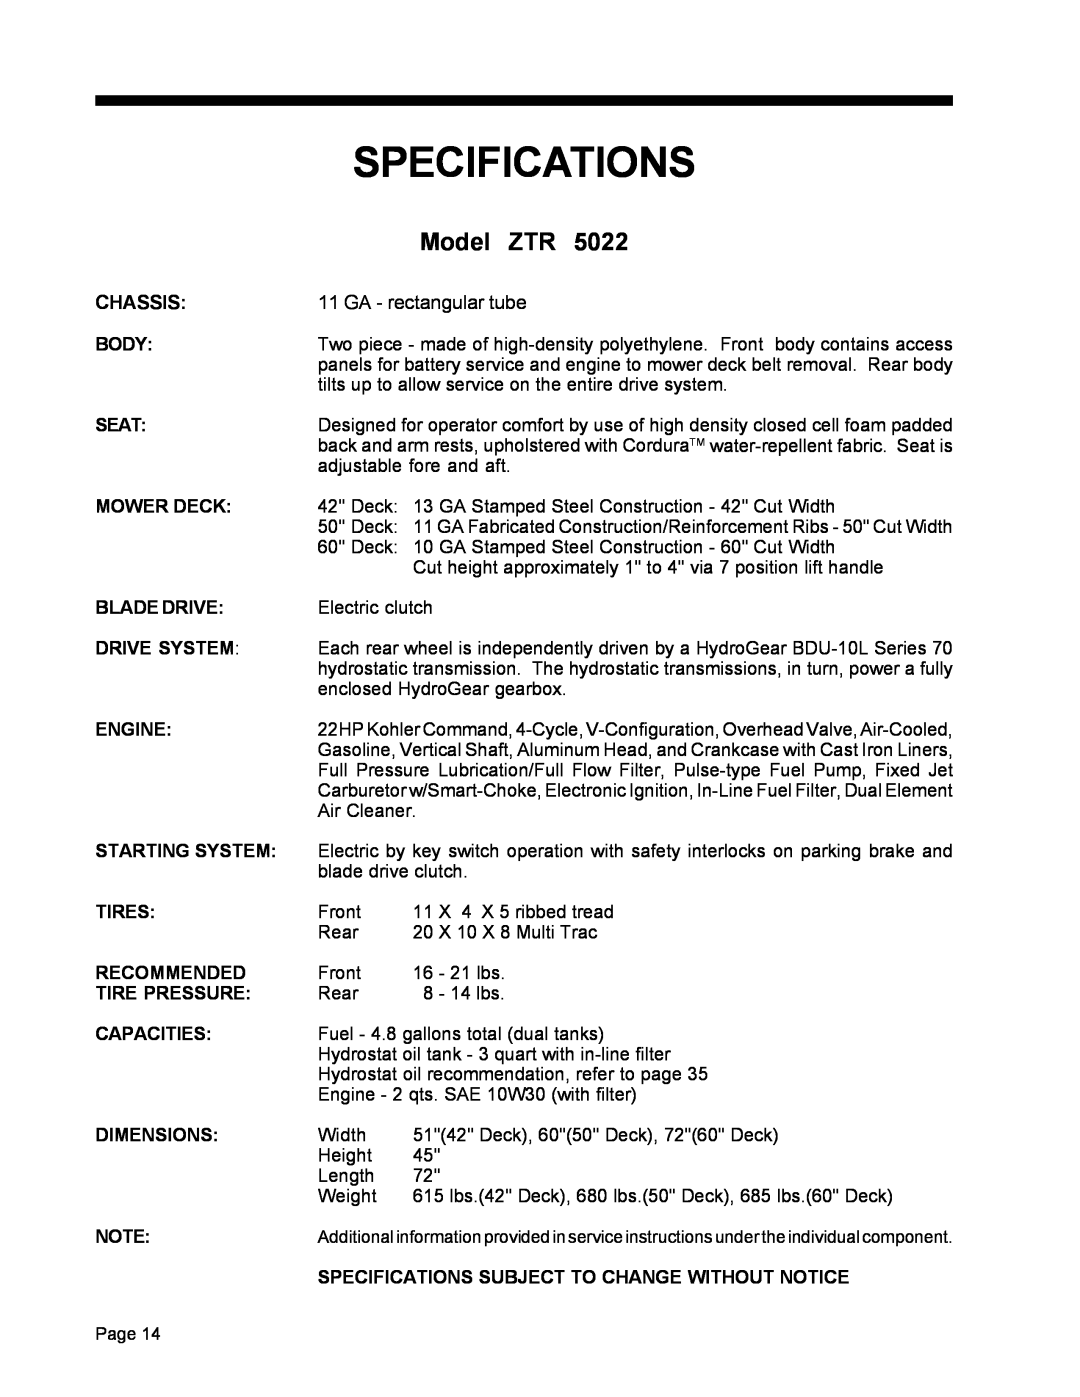 Dixon ZTR 5022, ZTR 5017 manual Specifications, Model ZTR, Chassis, GA - rectangular tube 